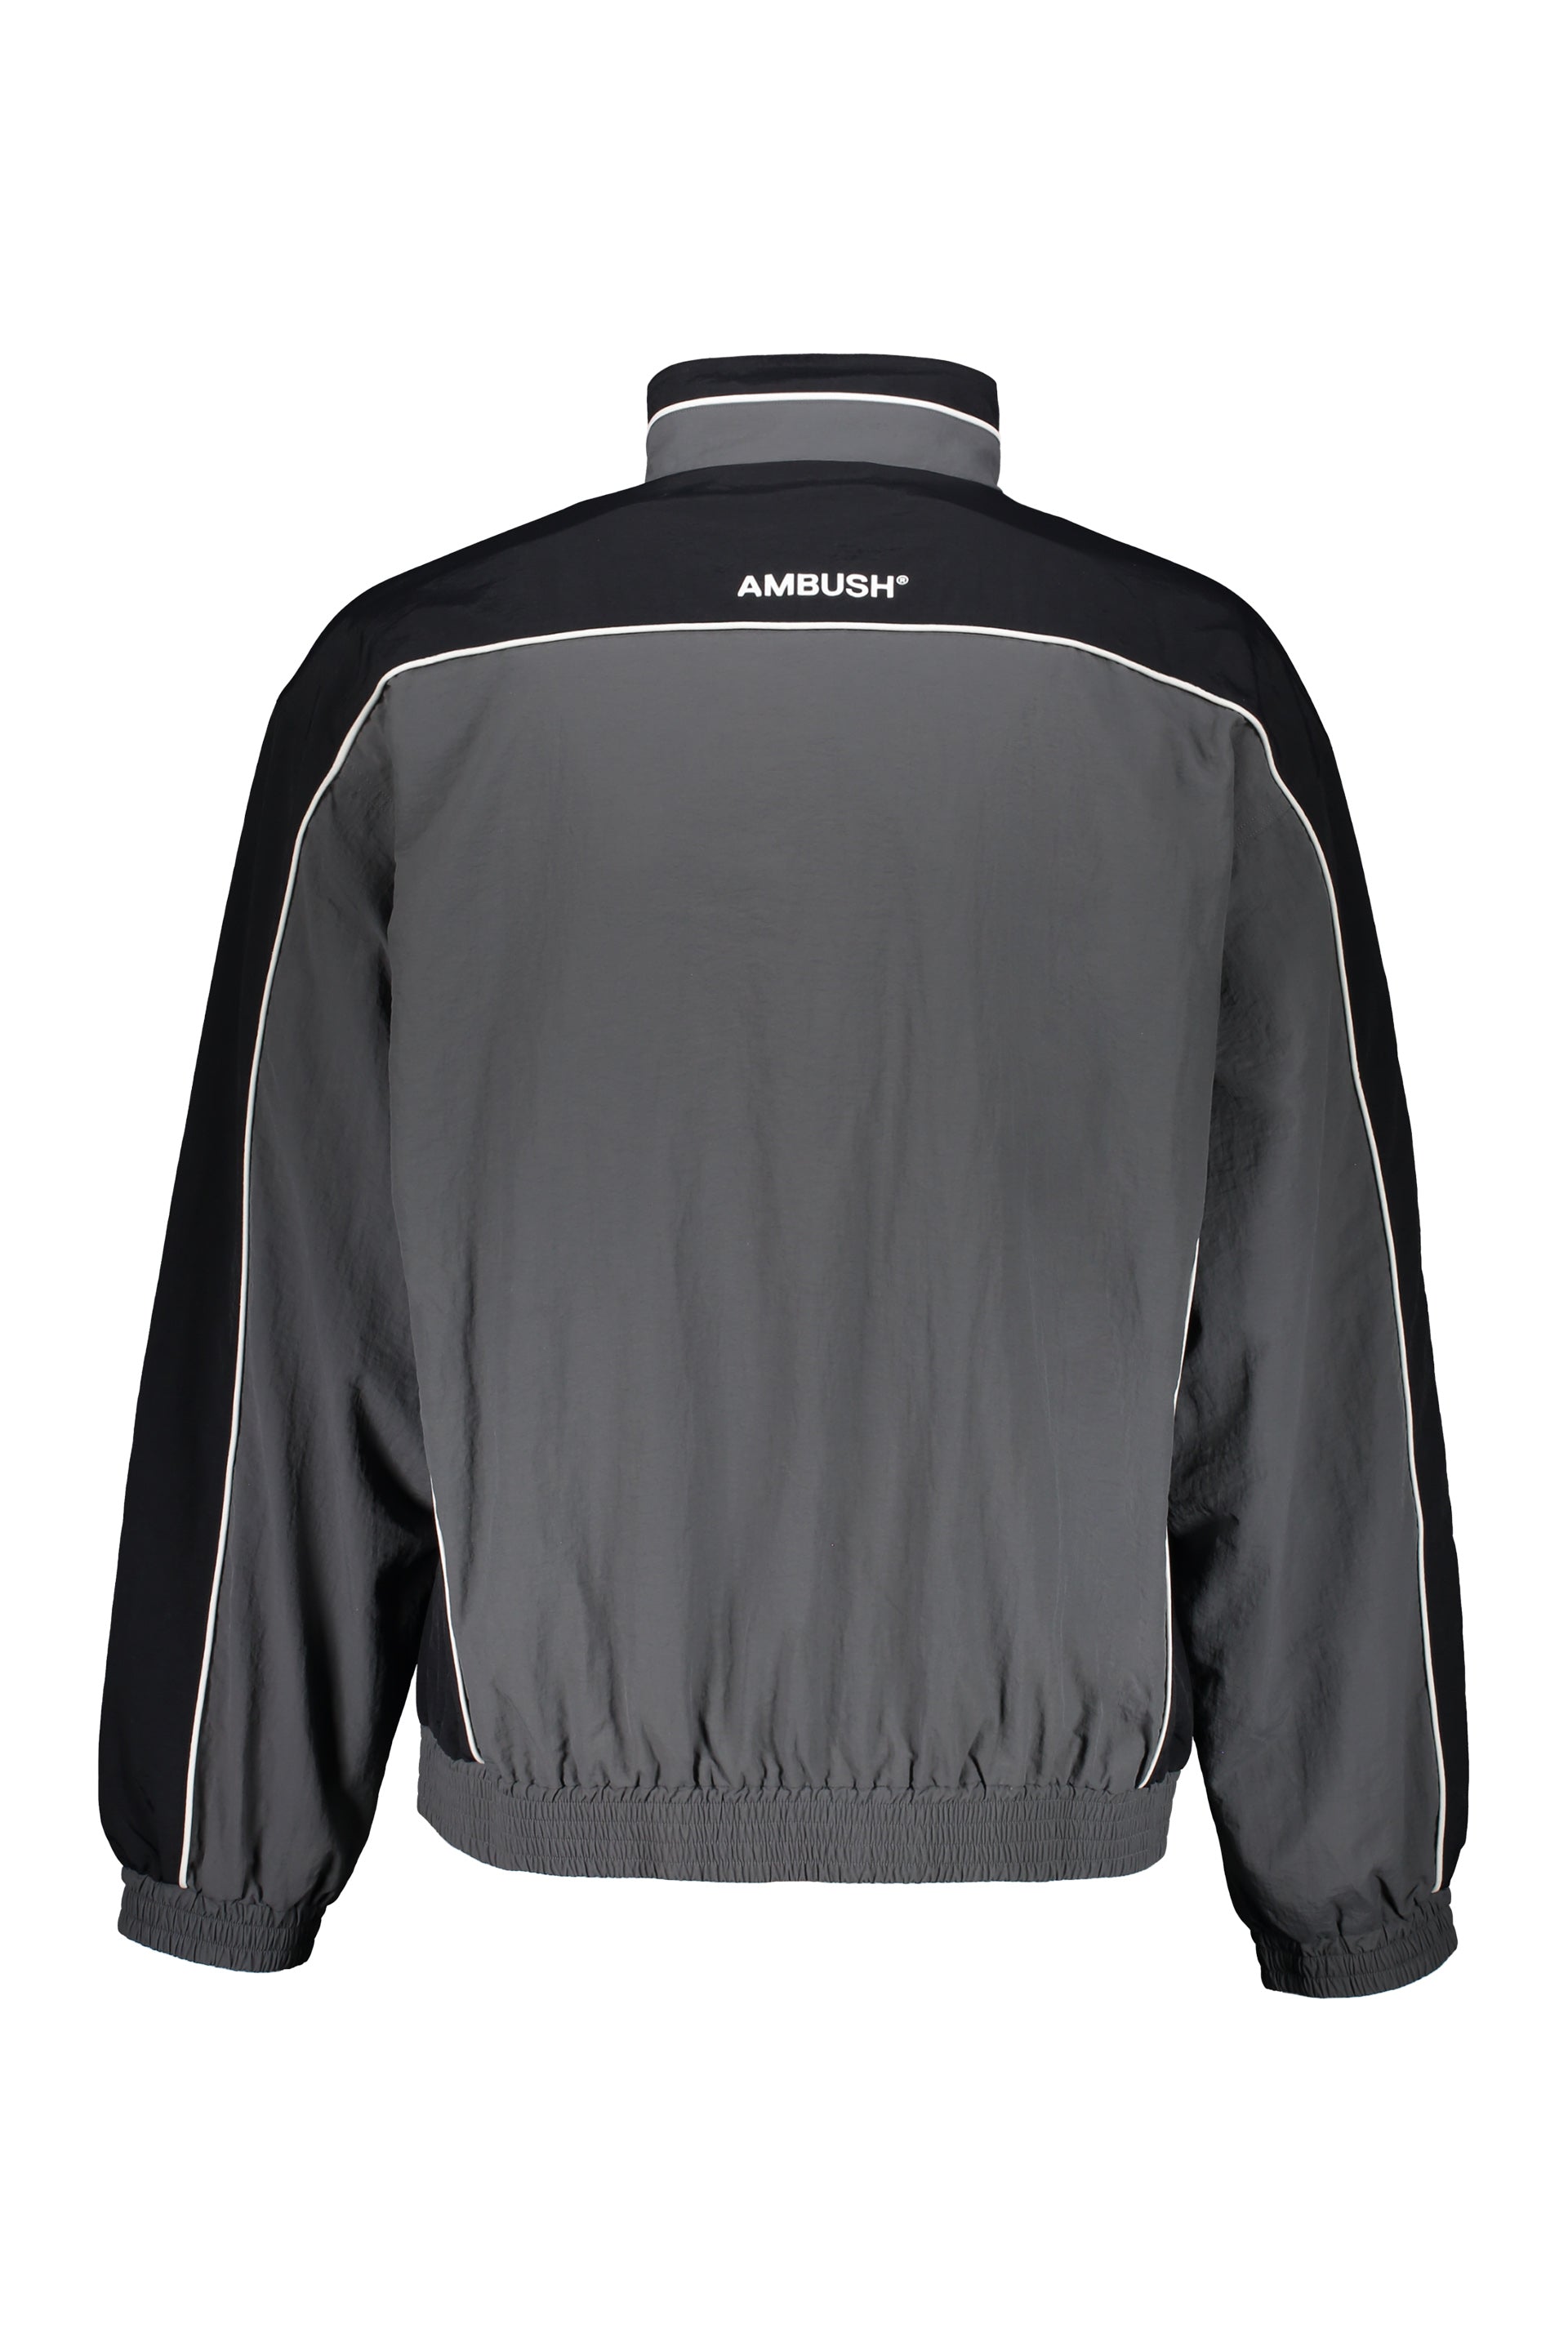 AMBUSH-OUTLET-SALE-Techno-fabric-jacket-Jacken-Mantel-ARCHIVE-COLLECTION-2.jpg